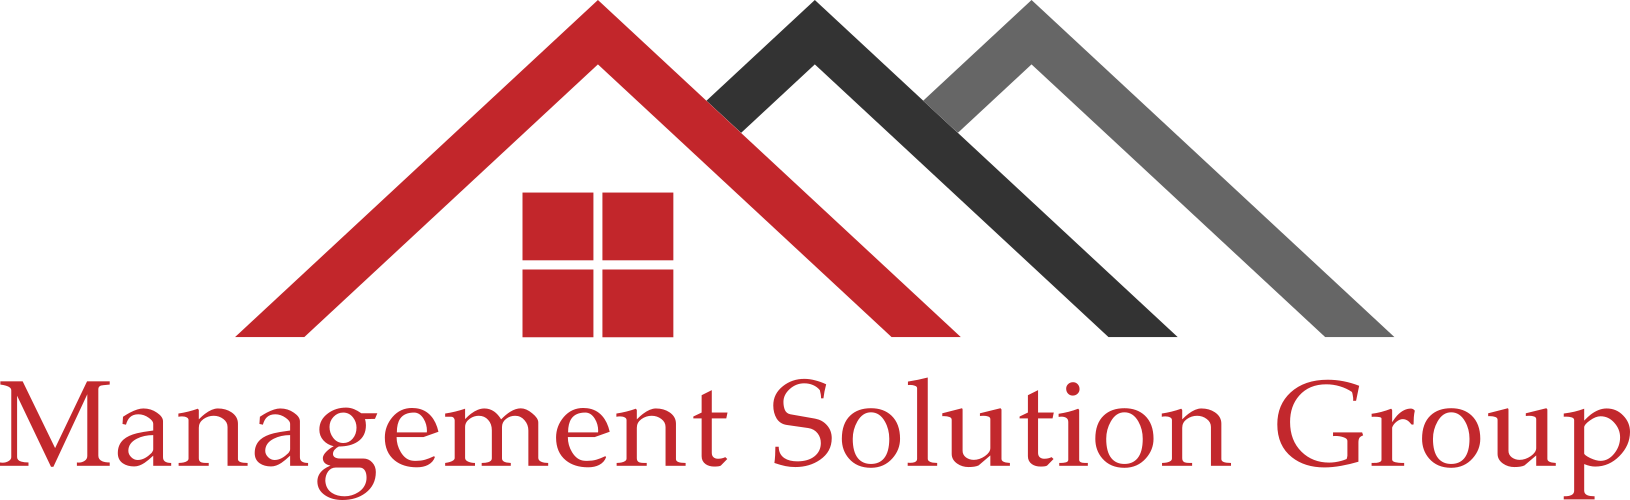 Management Solution Group Logo